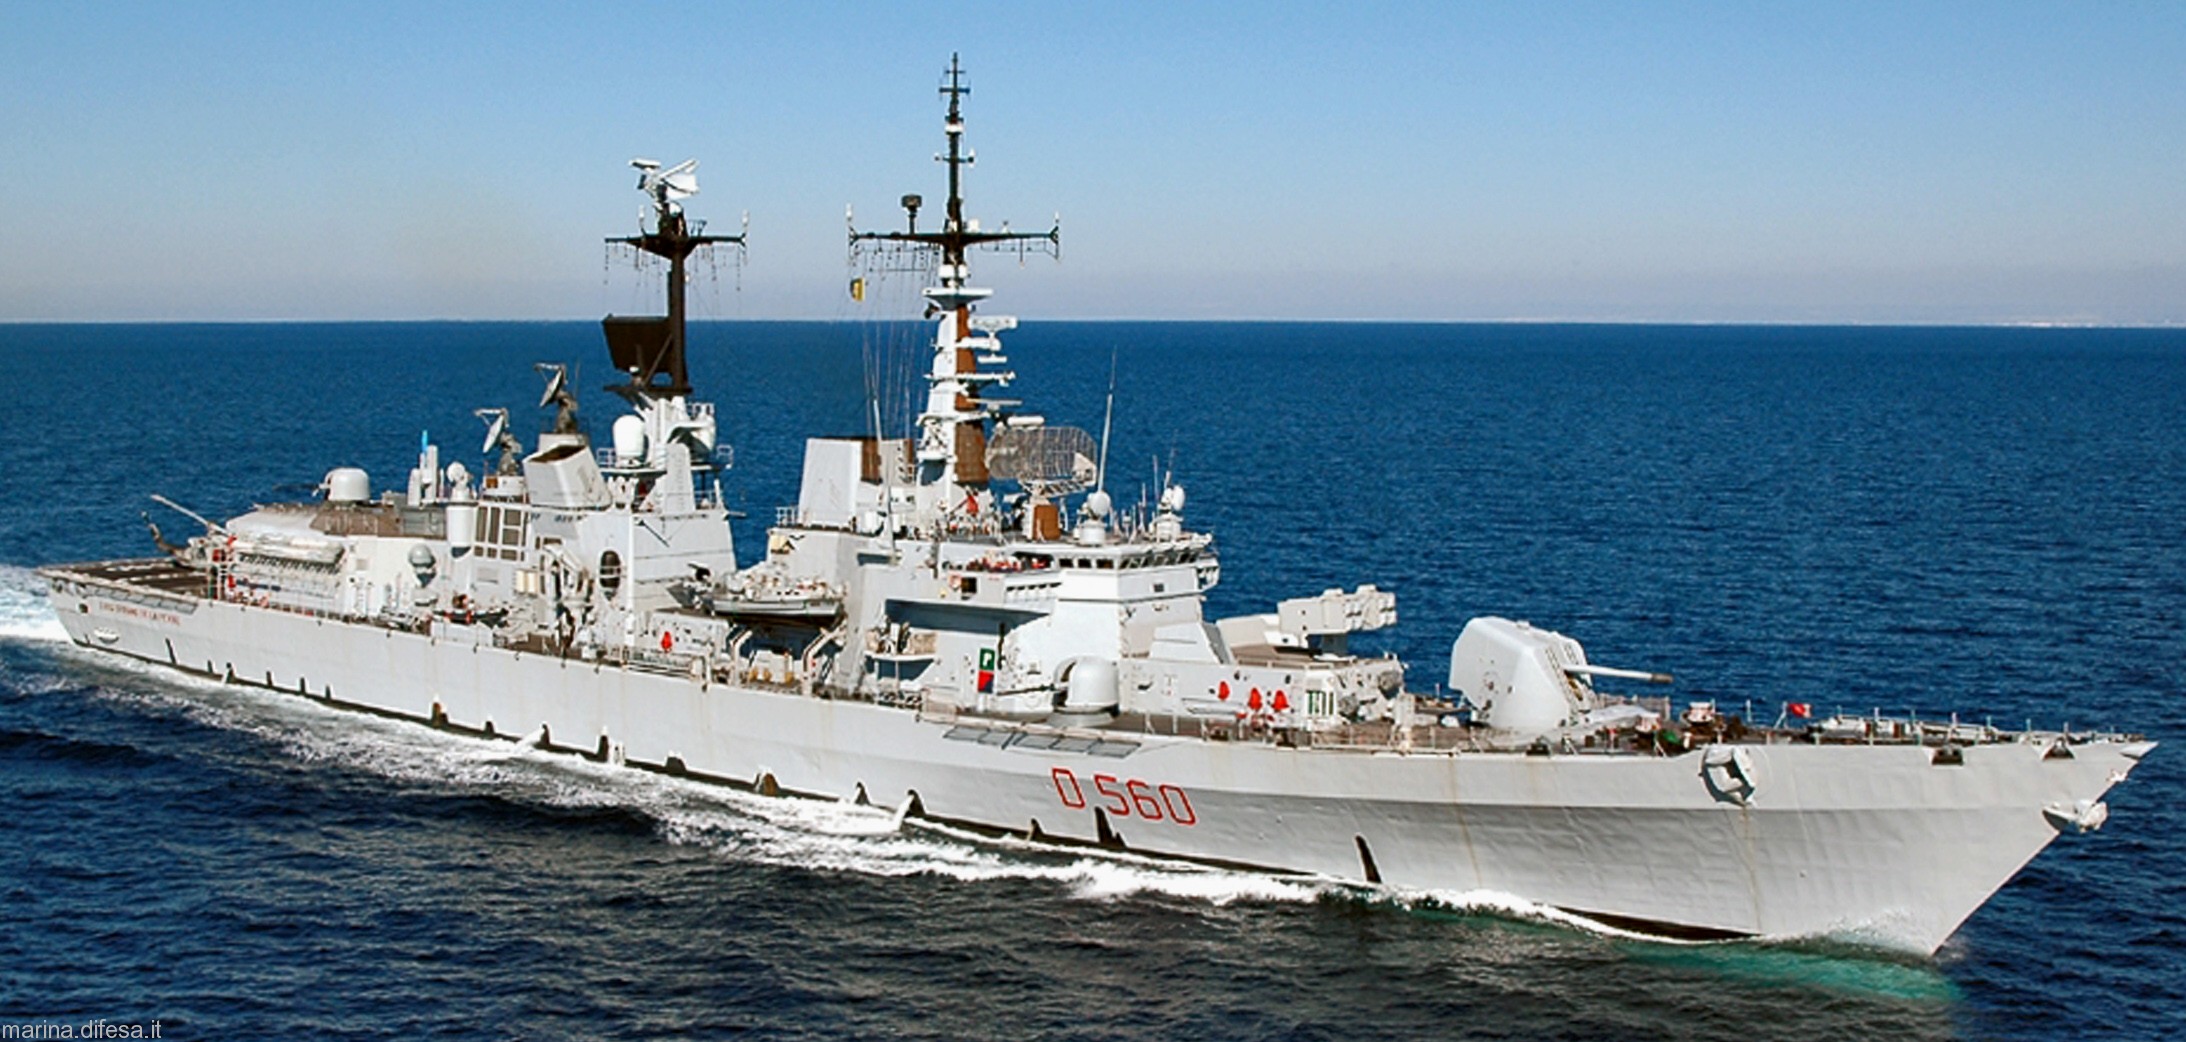 d-560 luigi durand de la penne its nave guided missile destroyer ddg italian navy marina militare 12